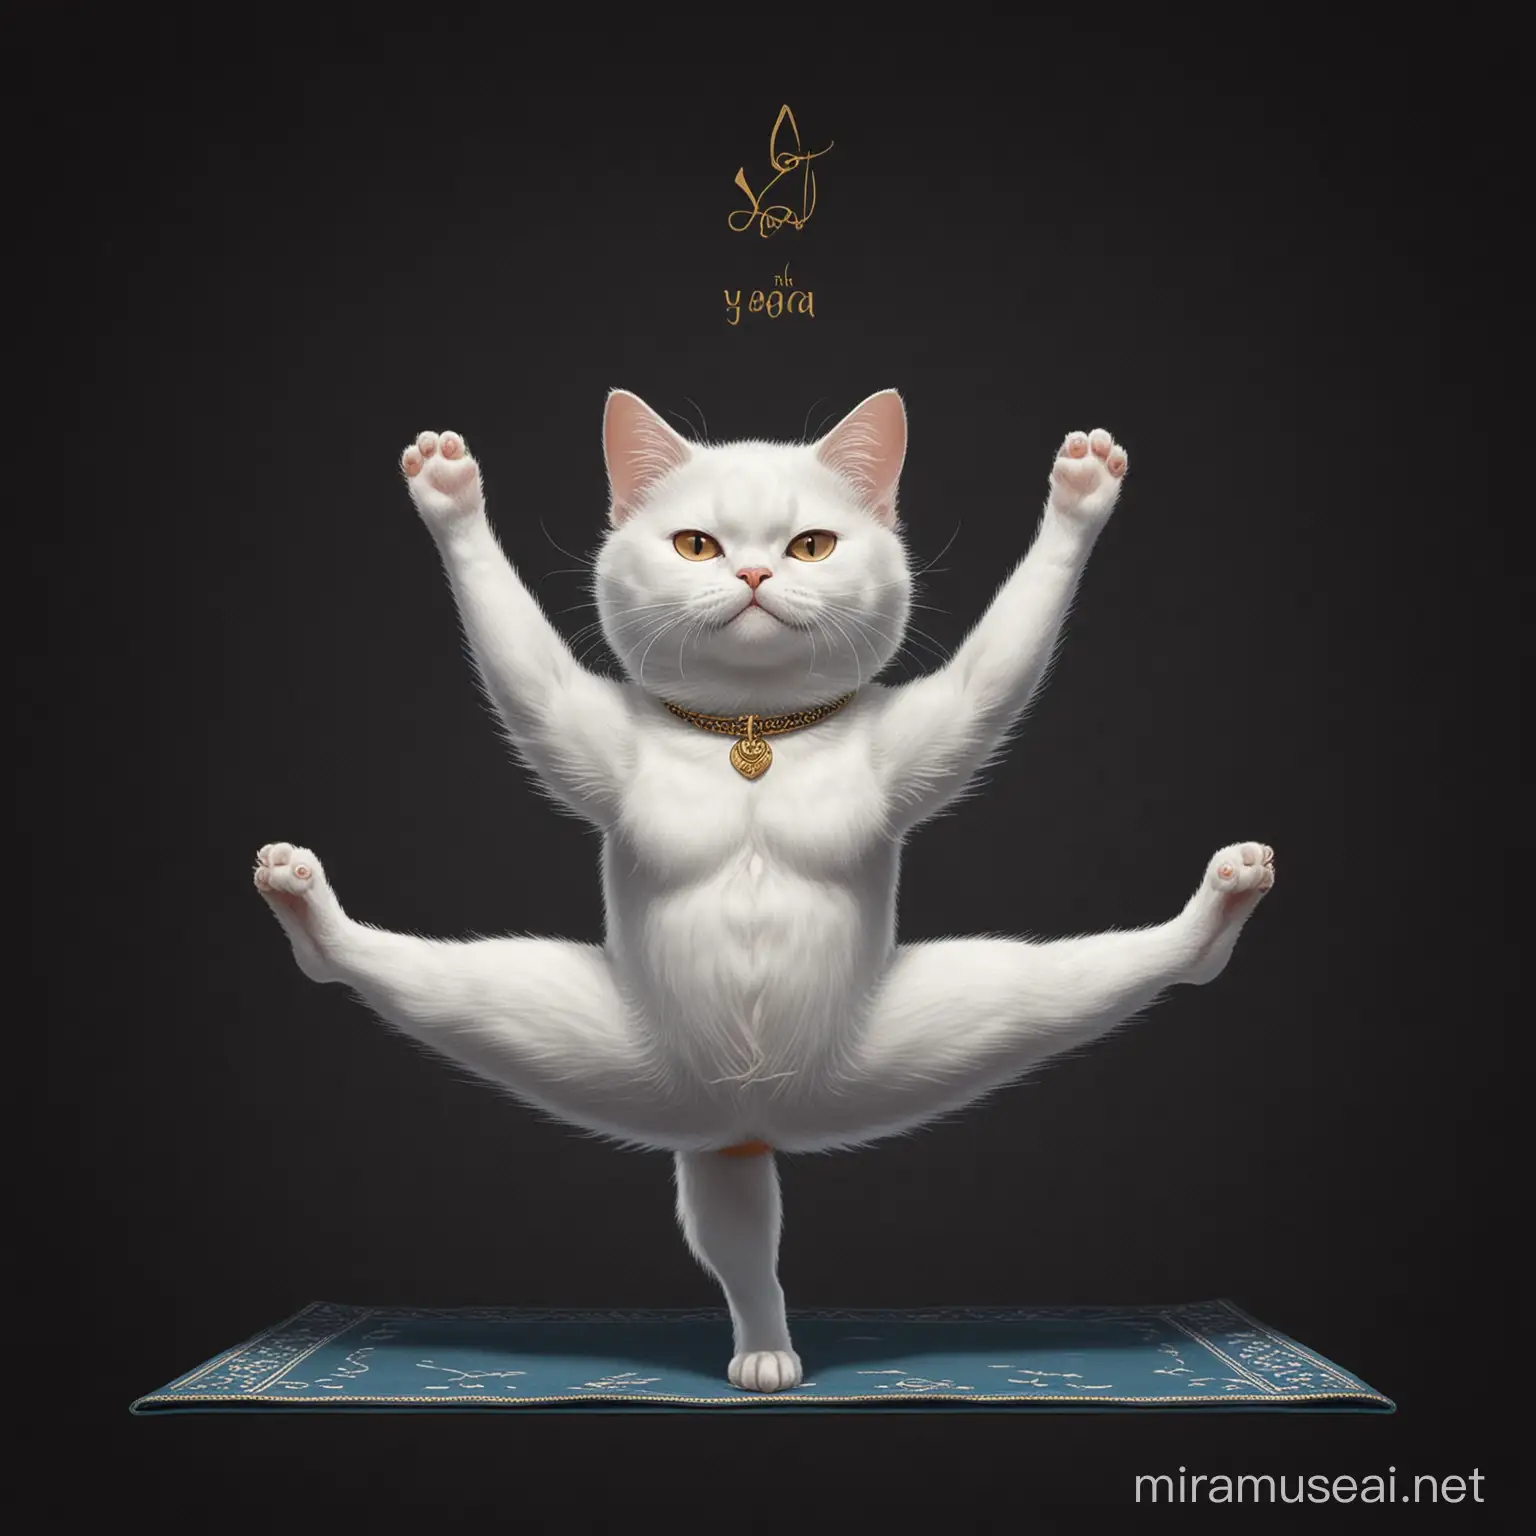 White Cat Practicing Yoga on Black Background